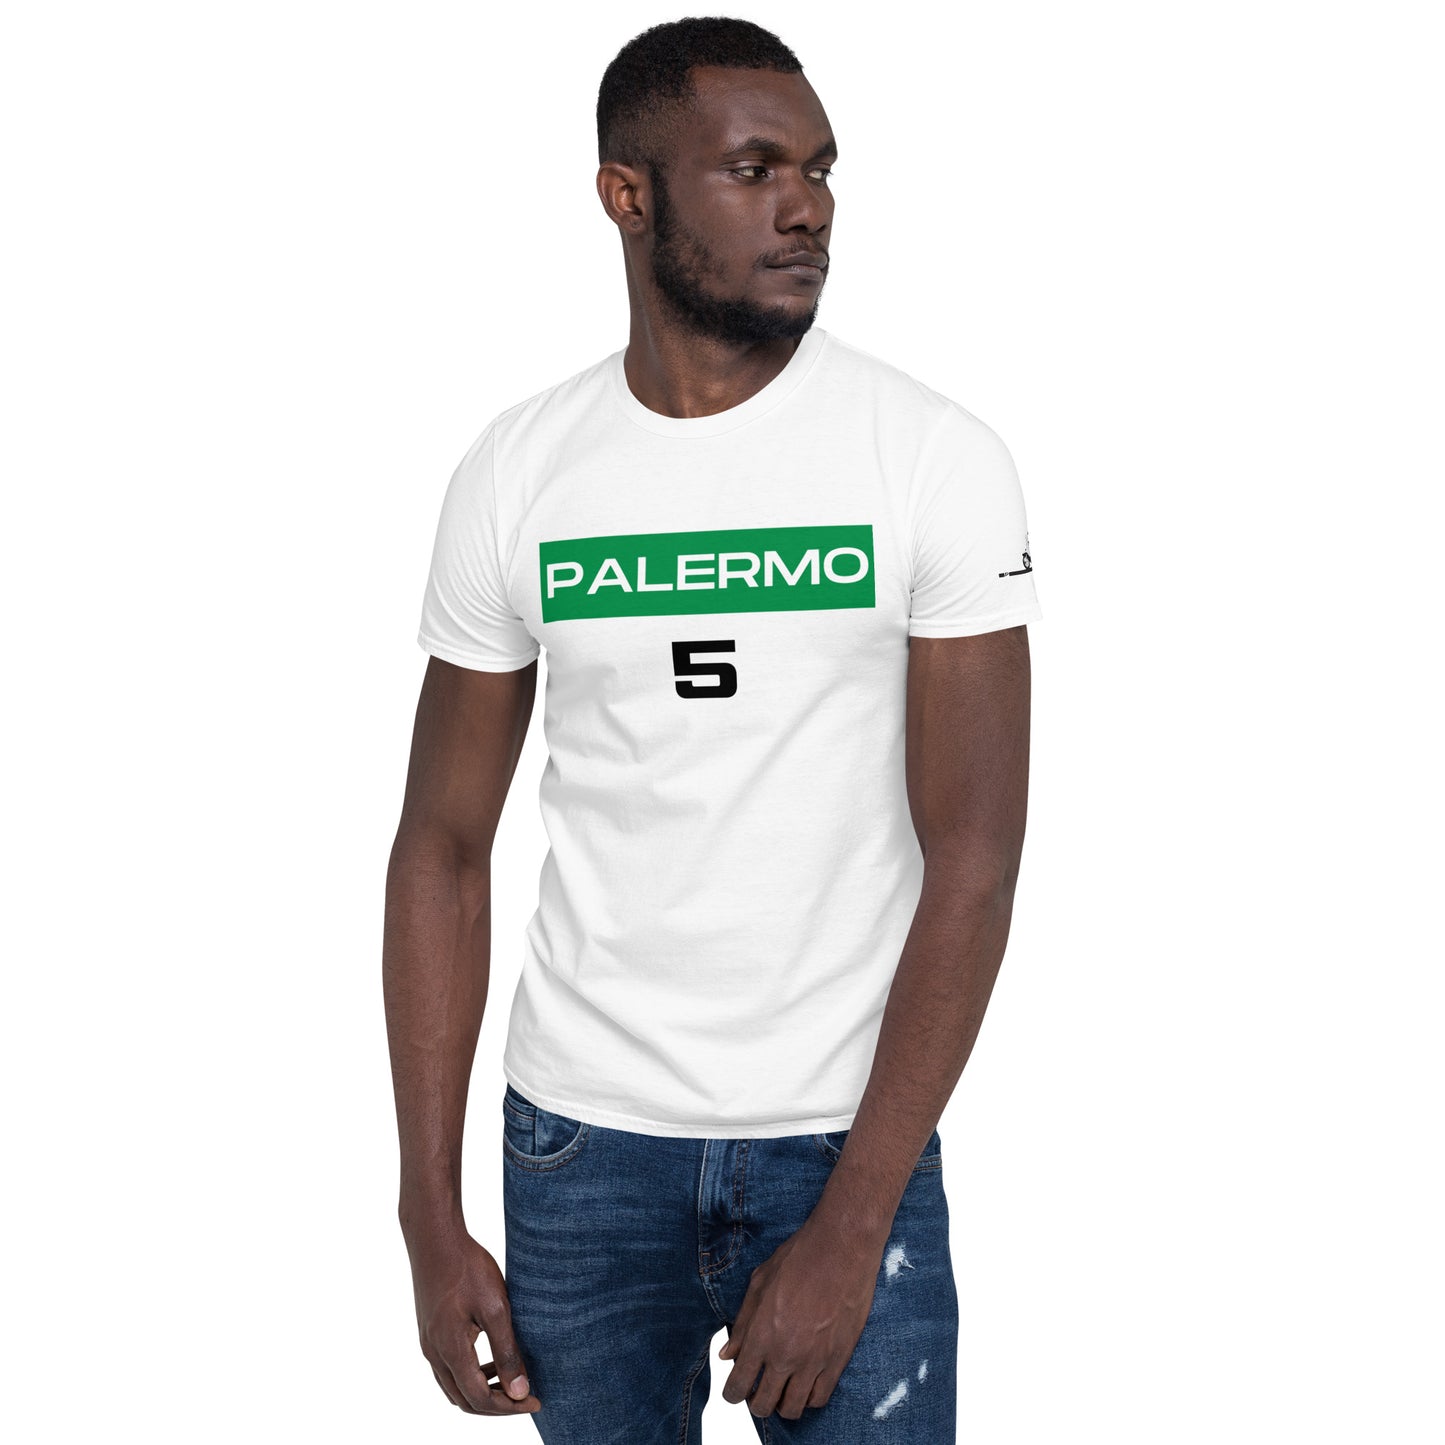 T-Shirt Palermo 5